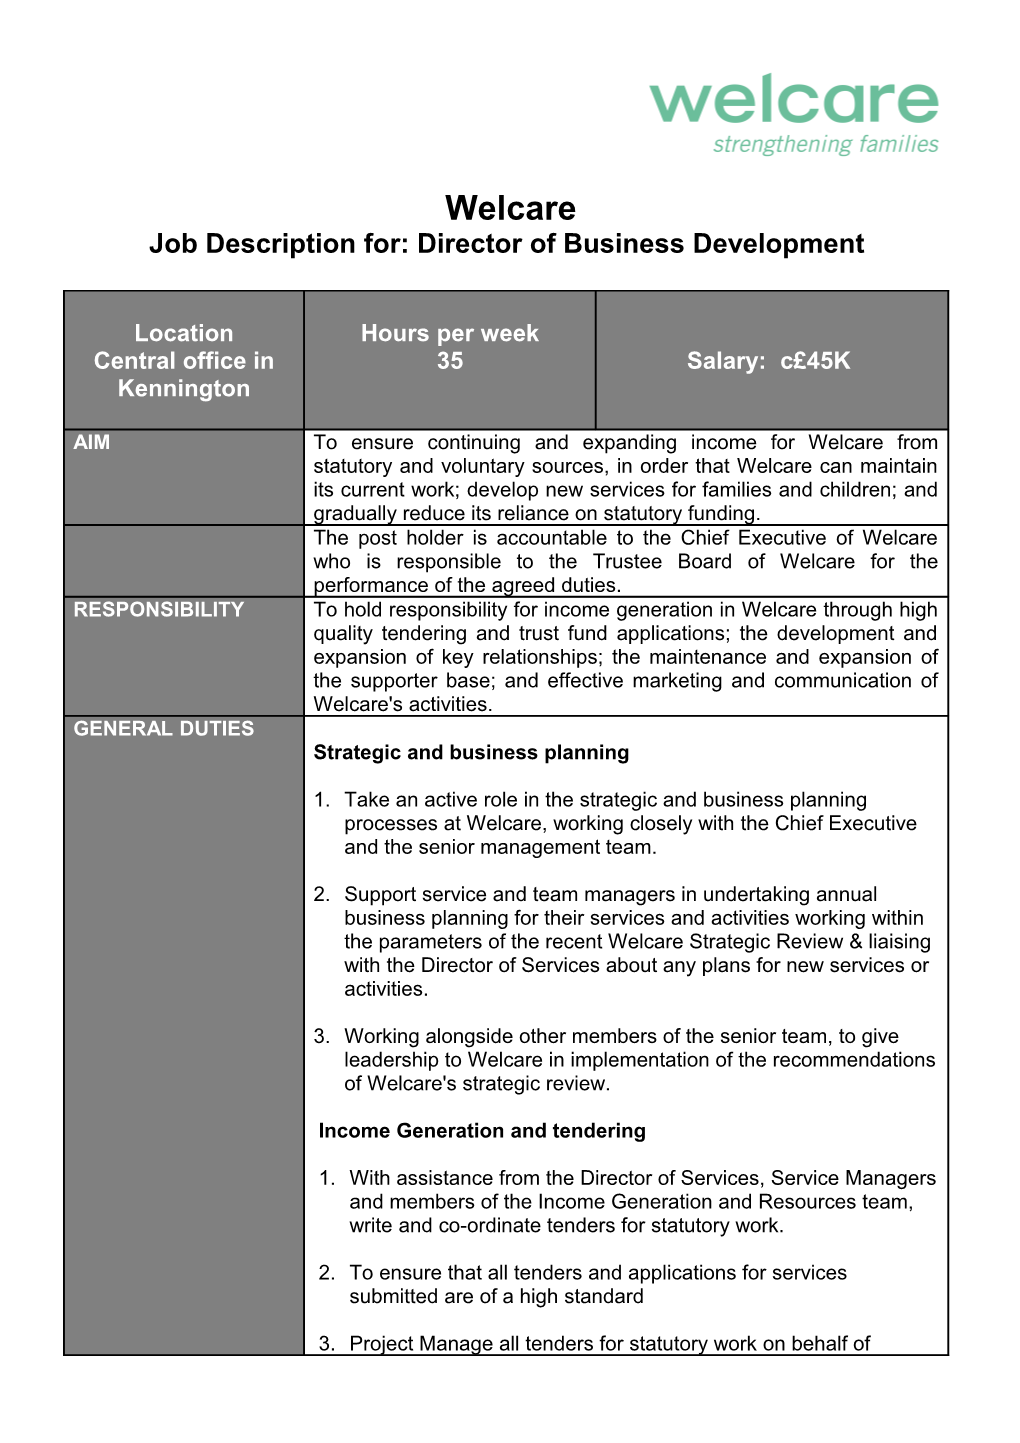 Job Description For: Director of Business Development